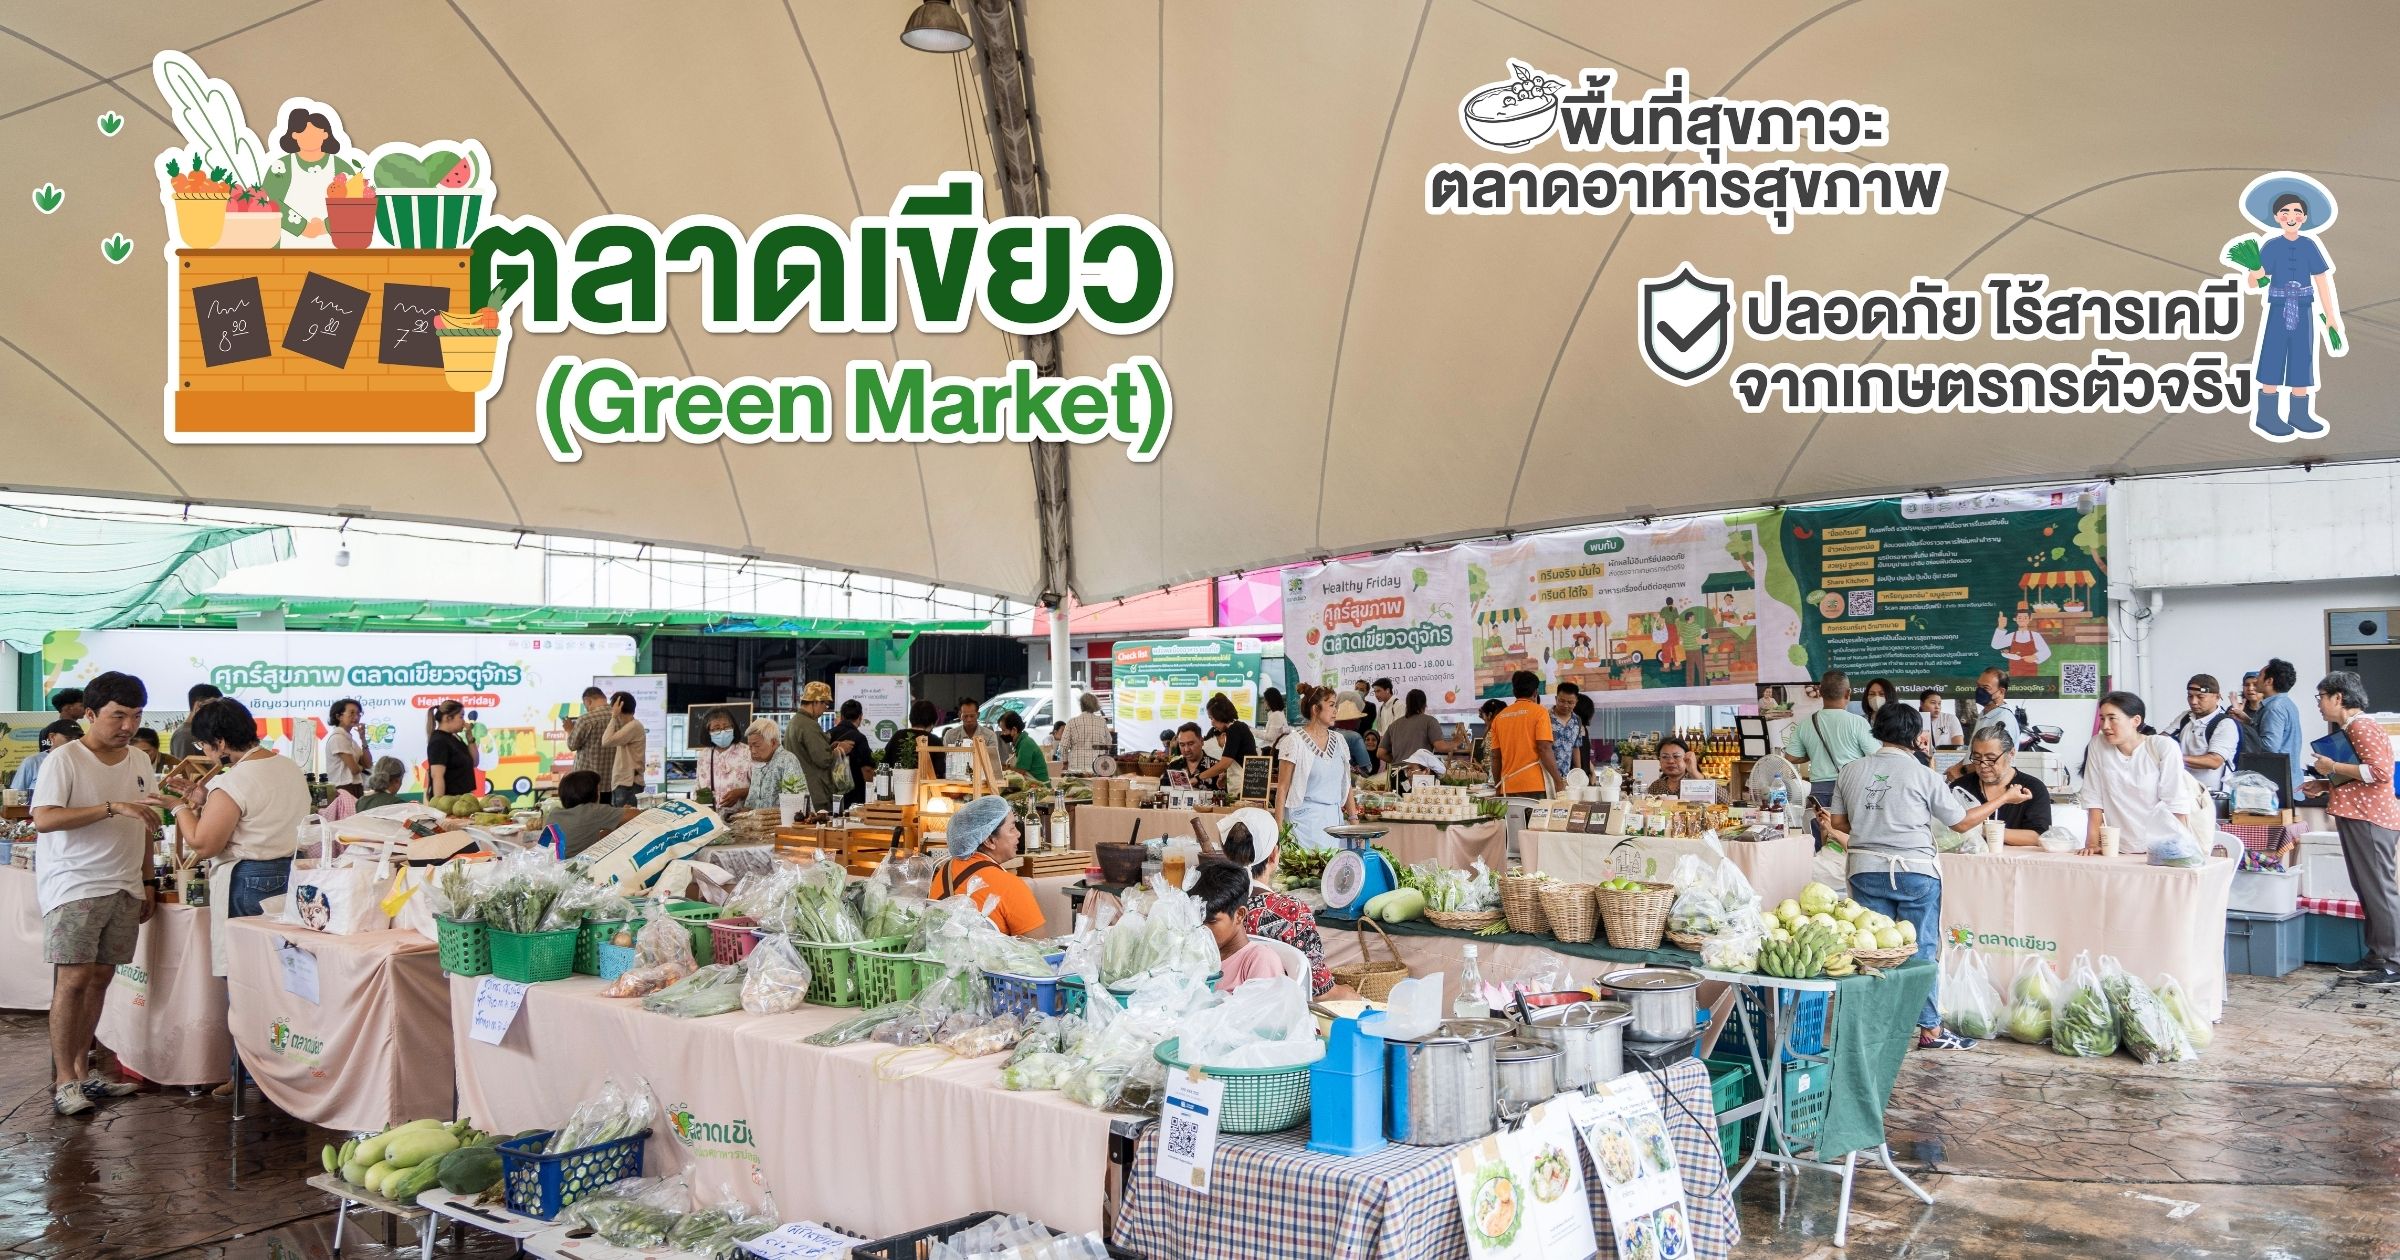 Green Market ตลาดเขียว อาหารสุขภาพ ผัก ผลไม้ ออร์แกนิค ออร์แกนิก ตลาดอาหารสุขภาพ